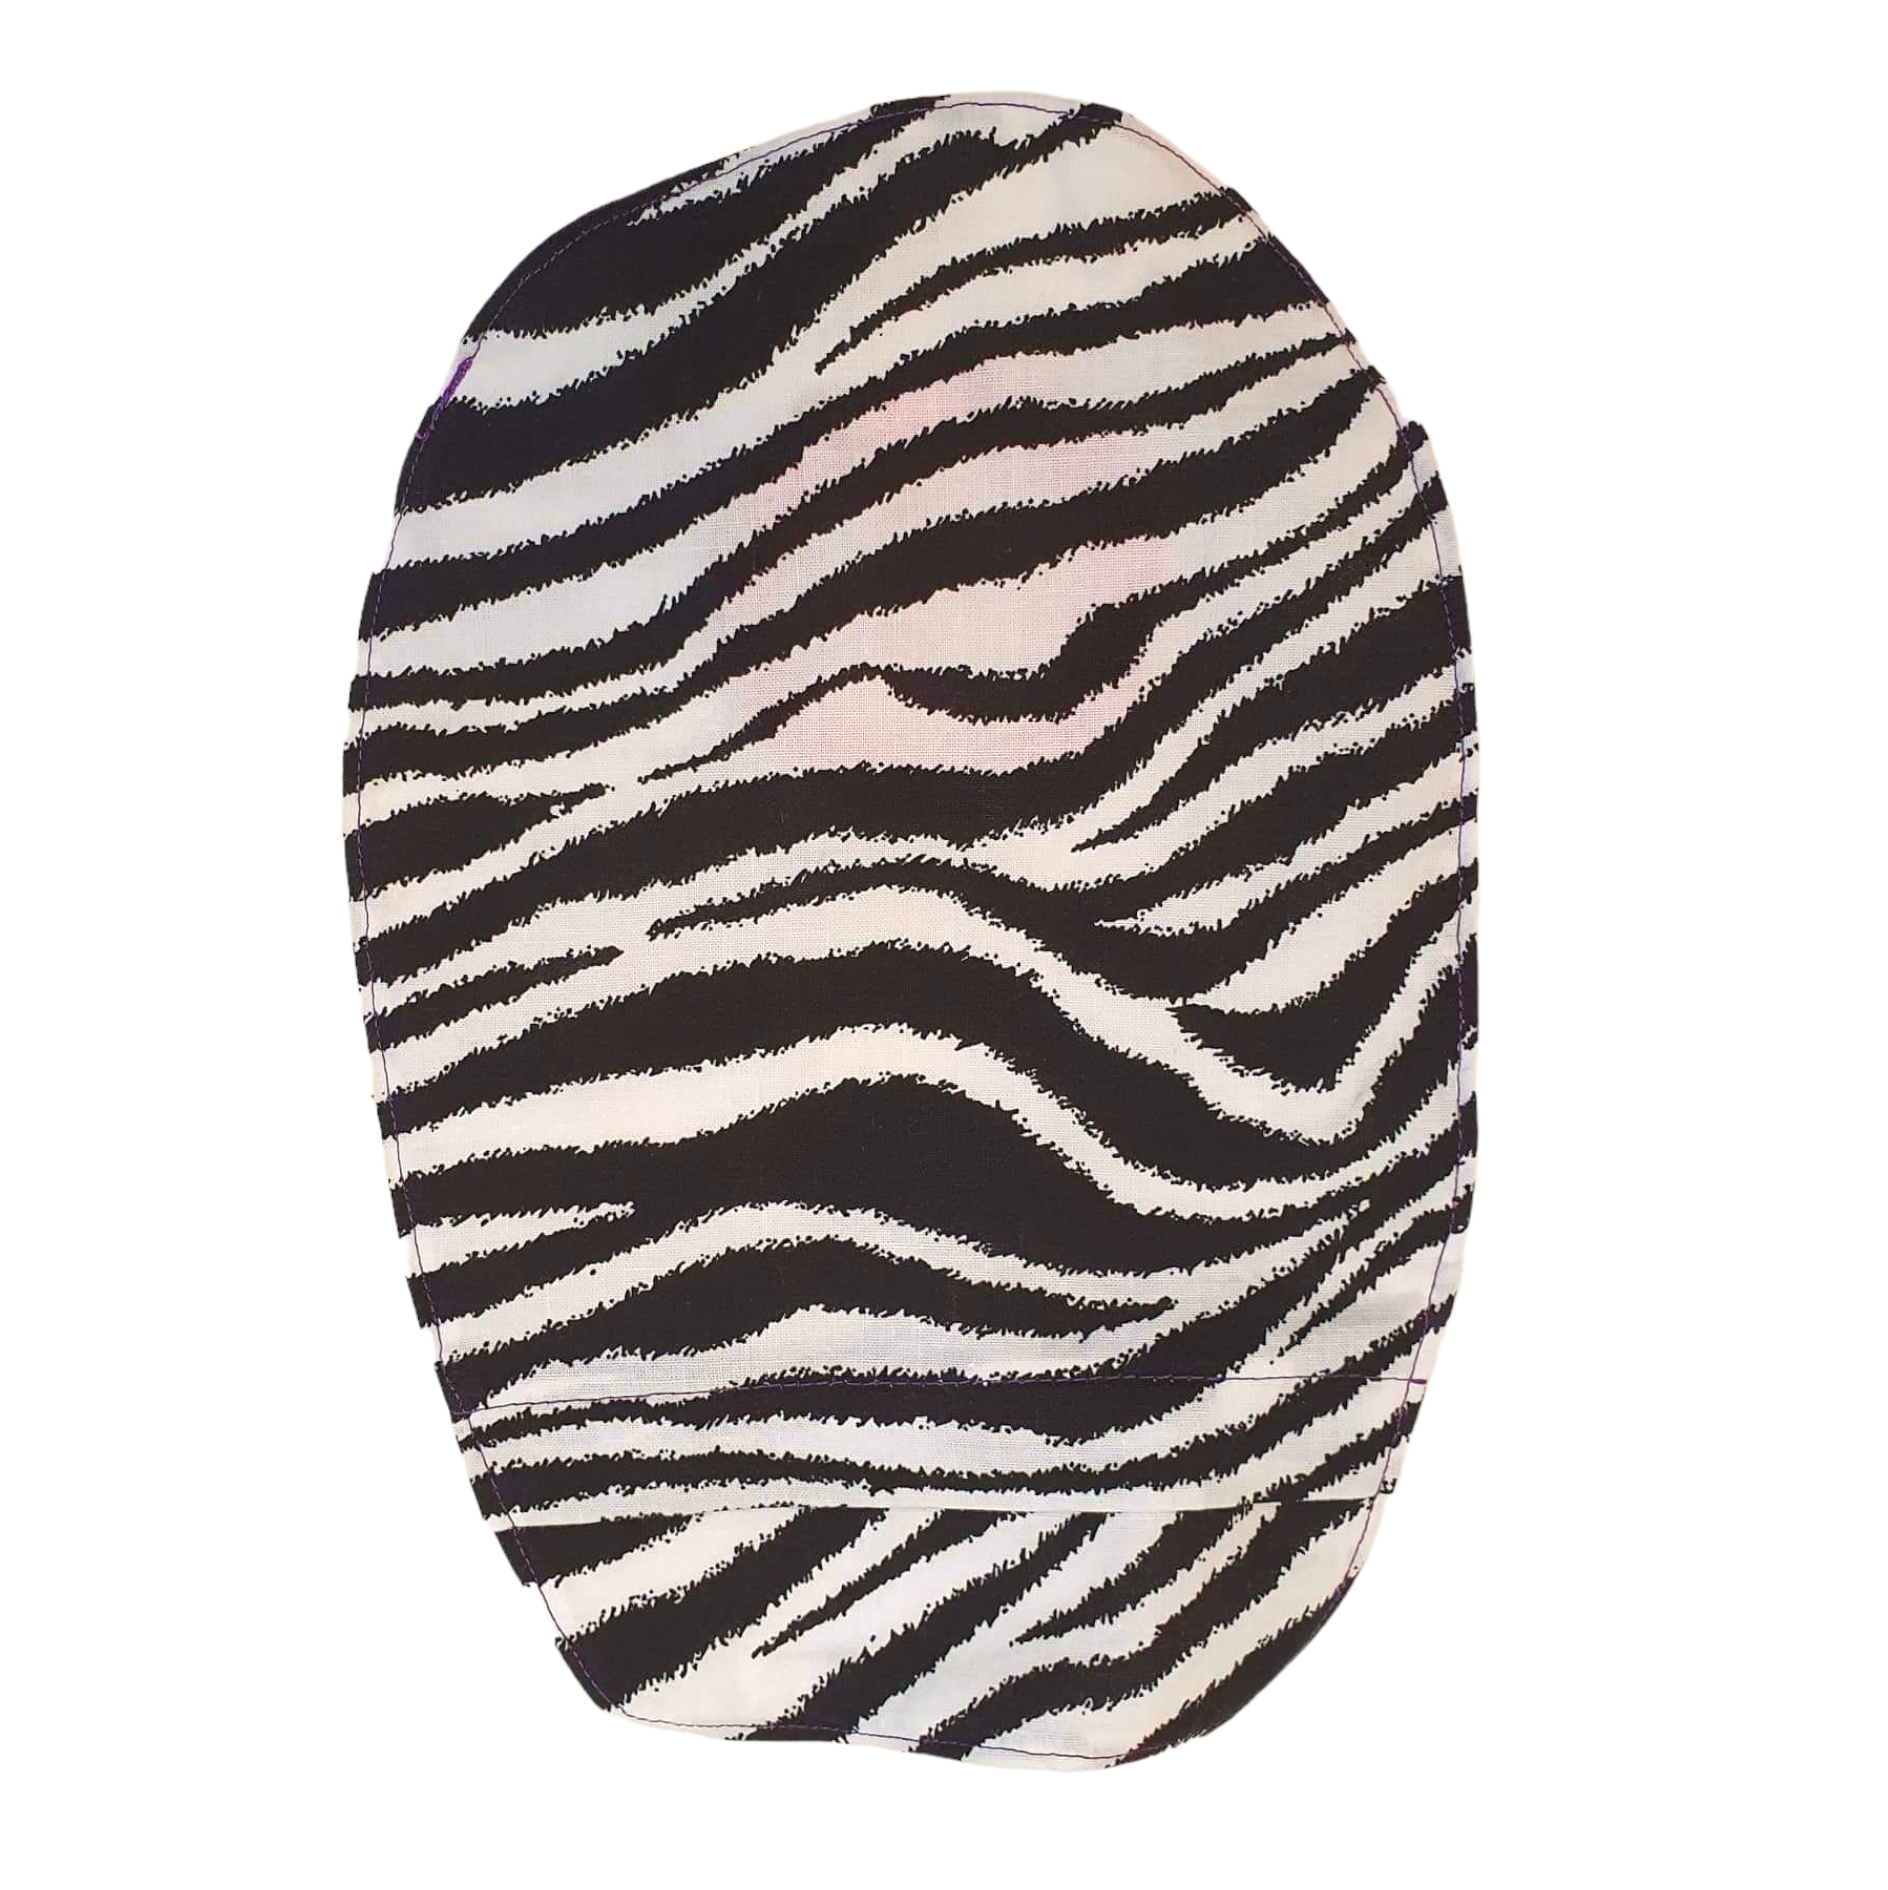 Ostomy Bag Covers Ostomy Supplies SPIRIT SPARKPLUGS BY DESIGN Zebra Design  